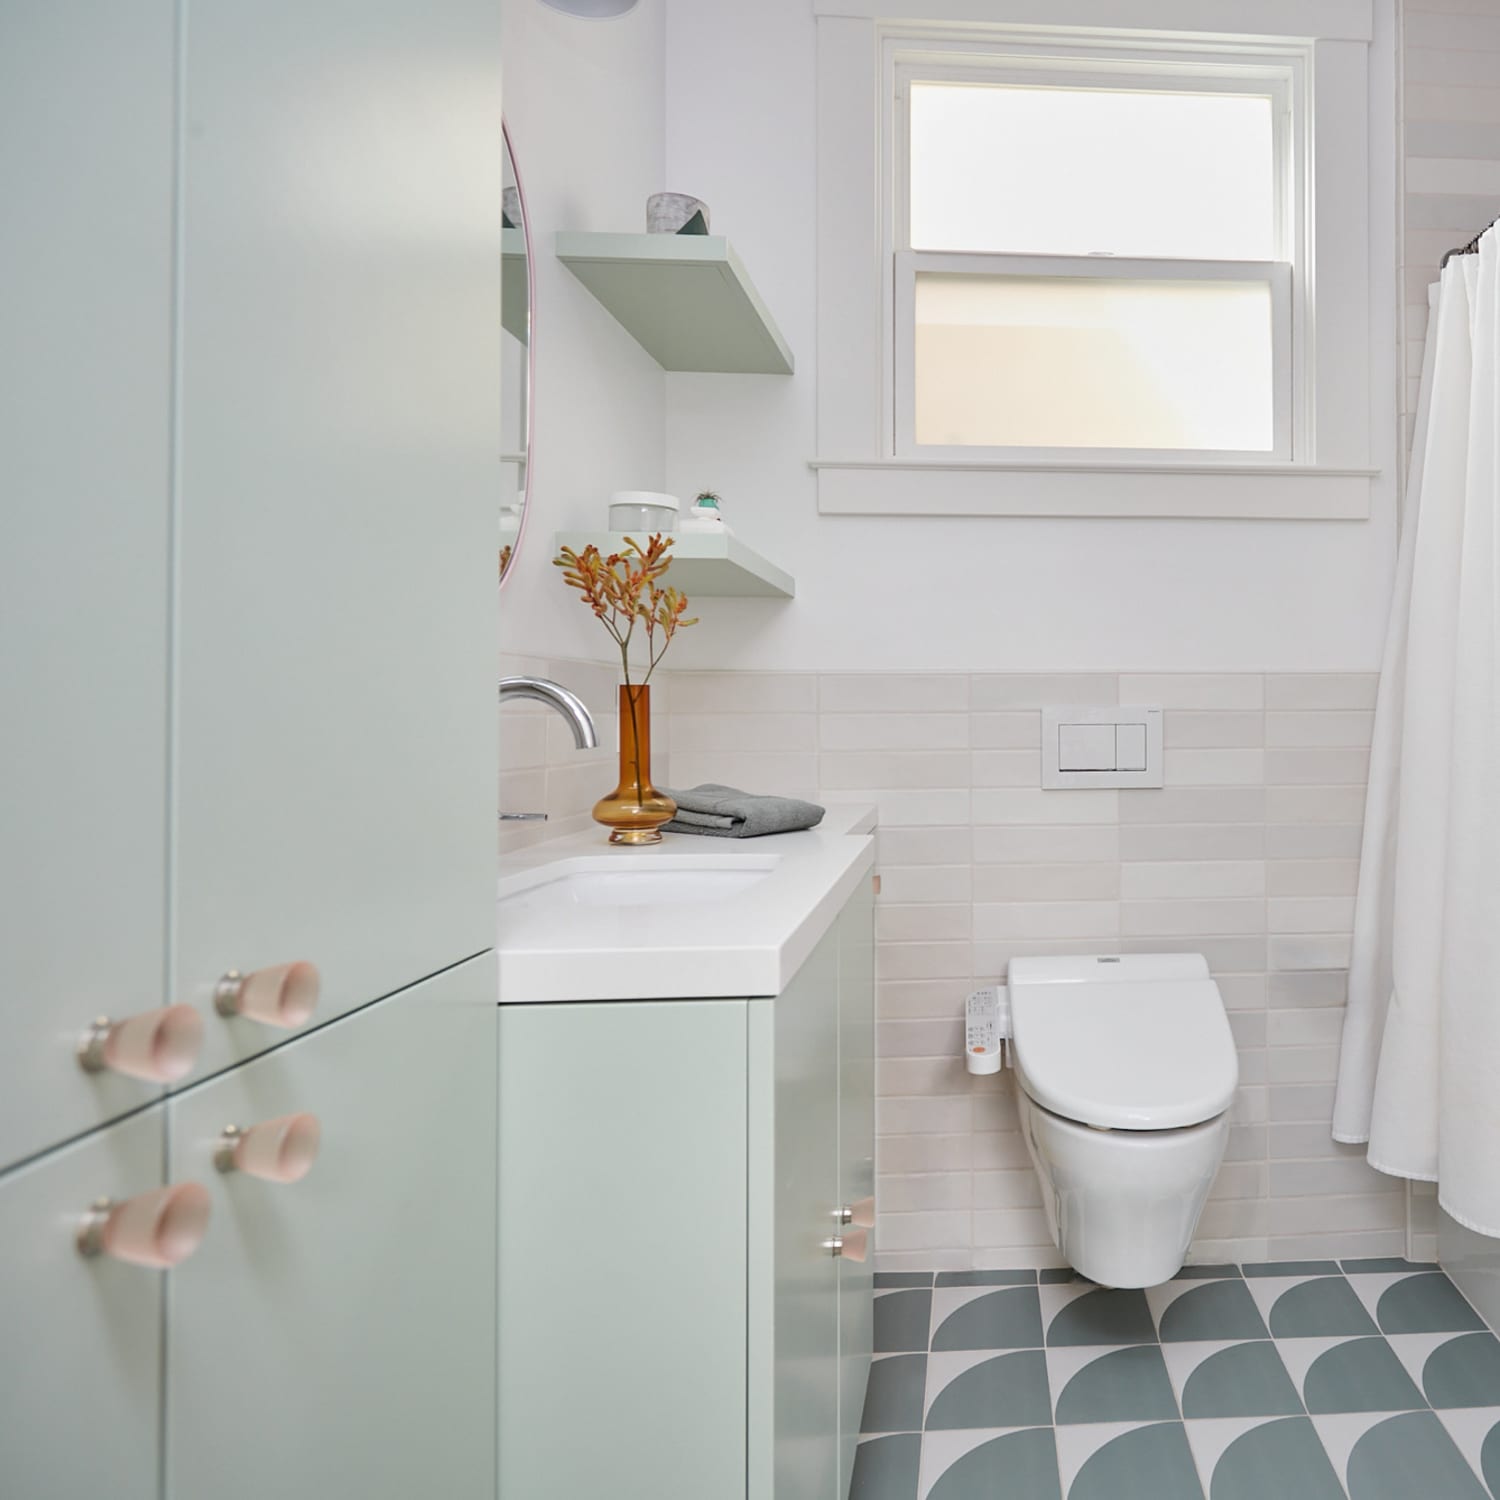 Shower Caddies in Bathroom Cabinets & Fixtures 